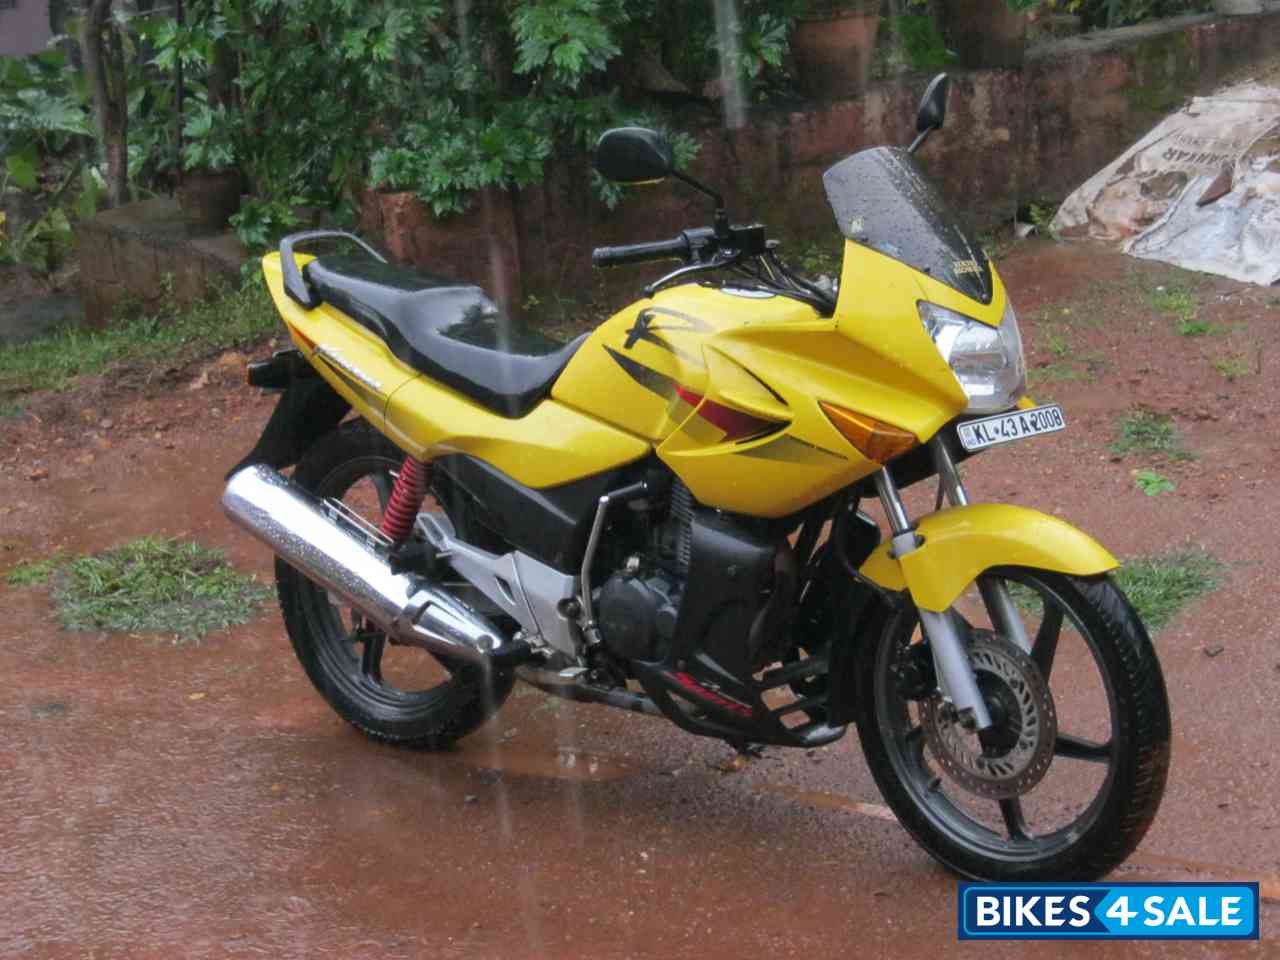 Used 08 Model Hero Karizma R For Sale In Malappuram Id Yellow Colour Bikes4sale